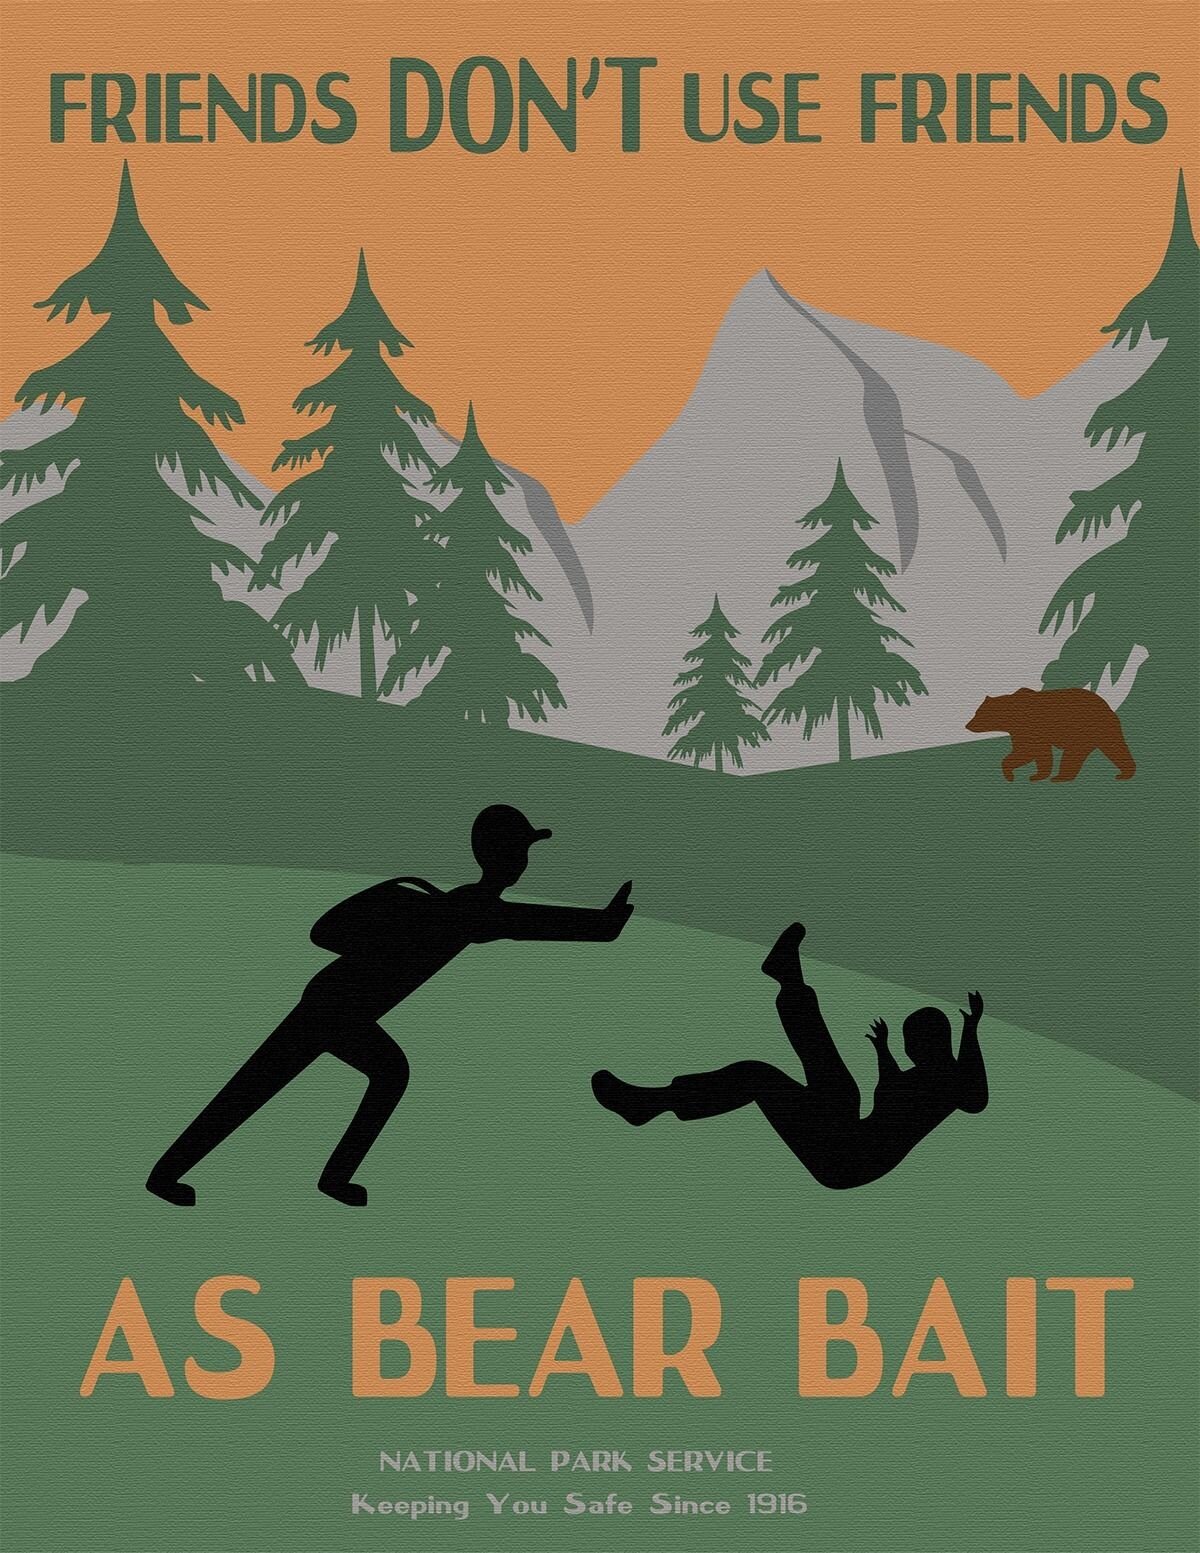 bear bait - Copy.jpg